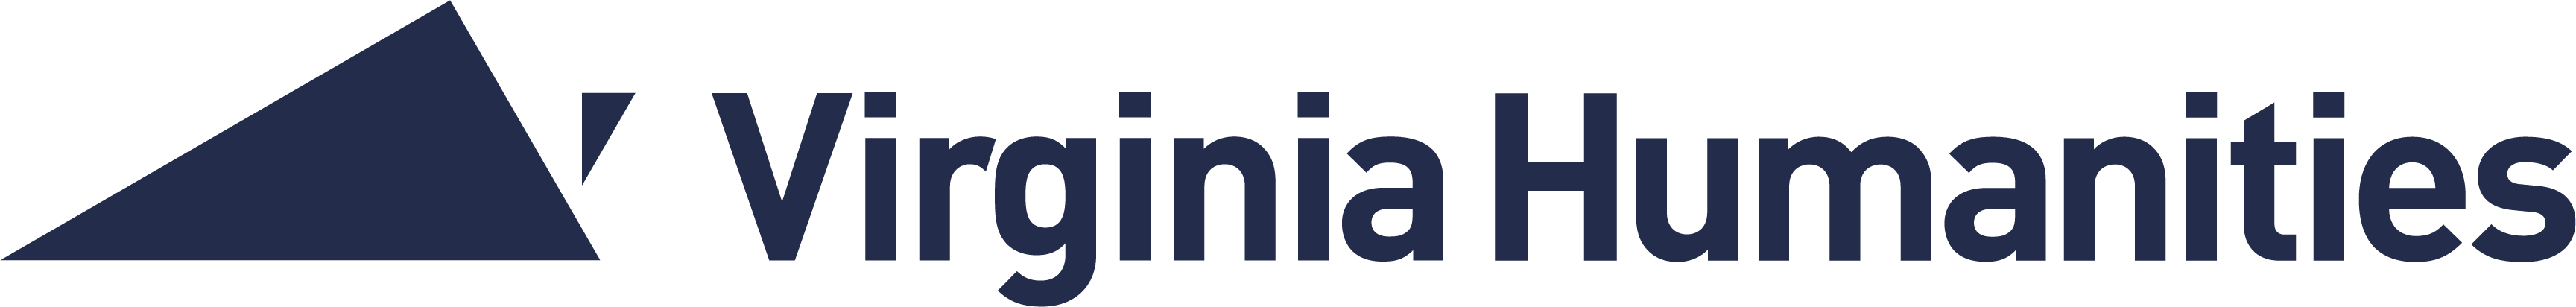 virginia_humanities_logo.png